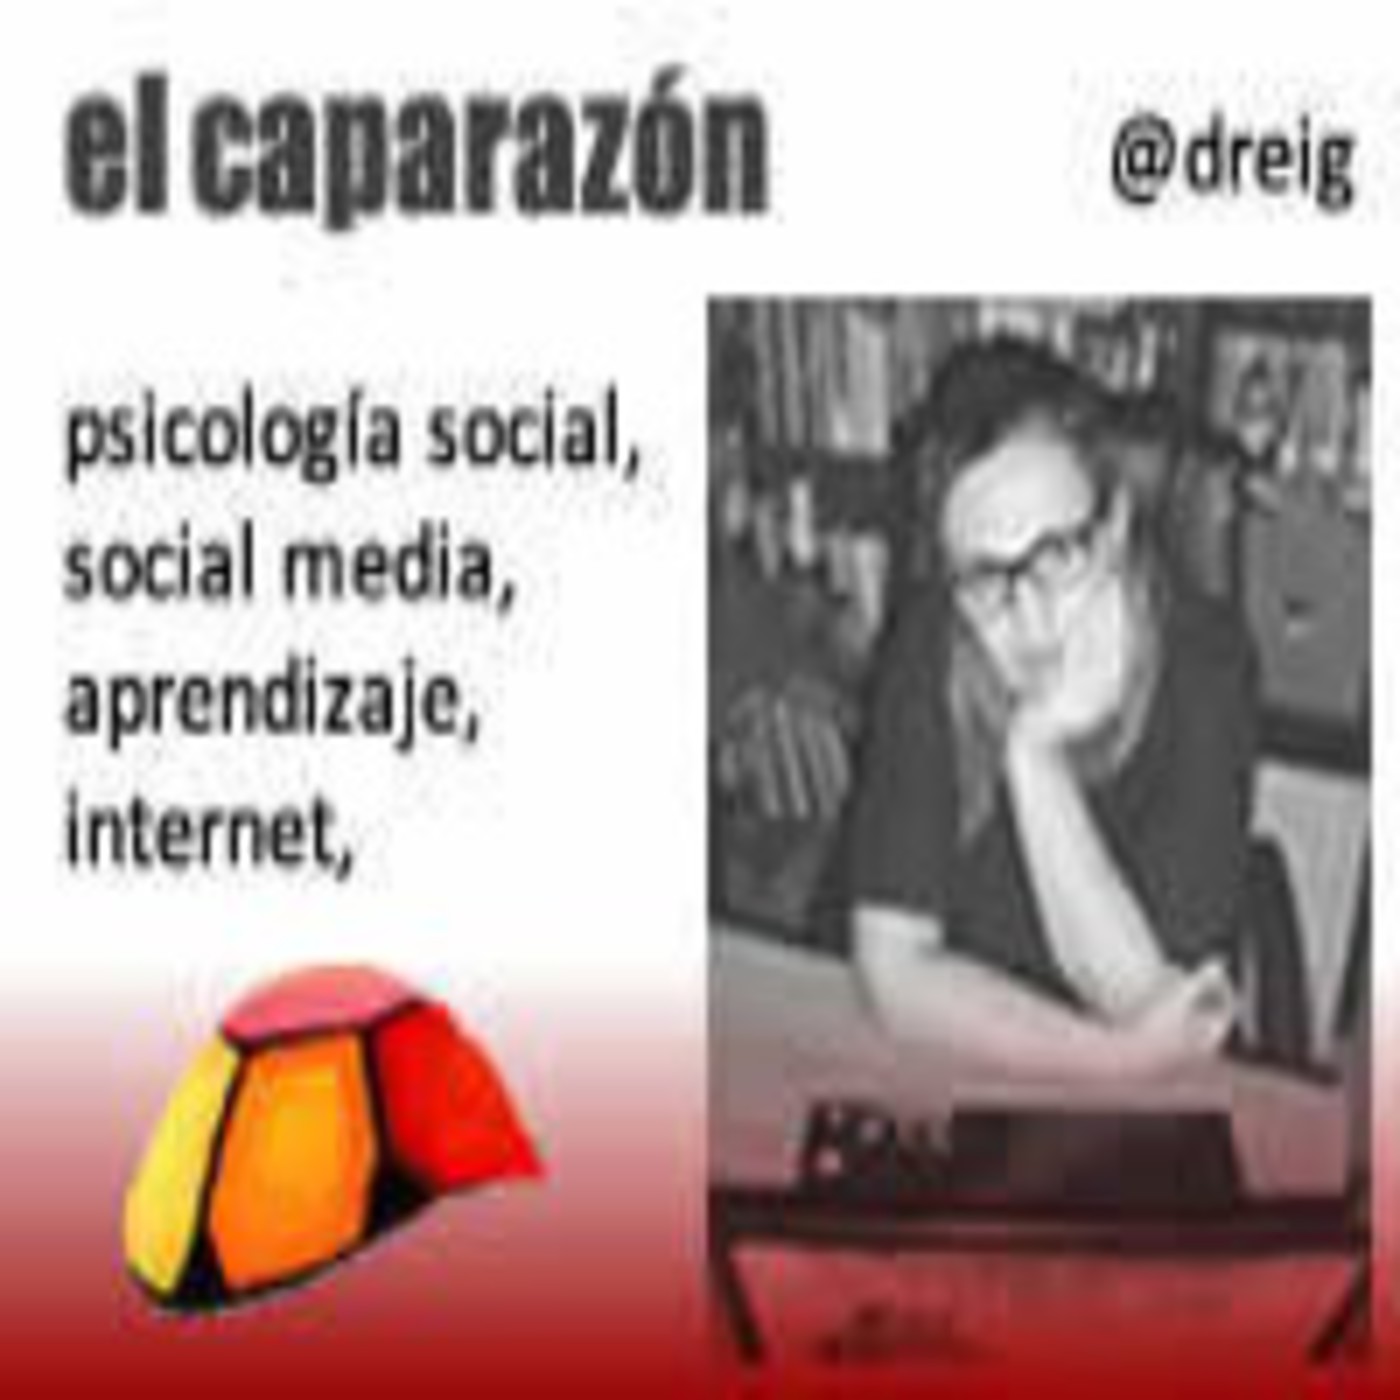 Podcast El caparazon